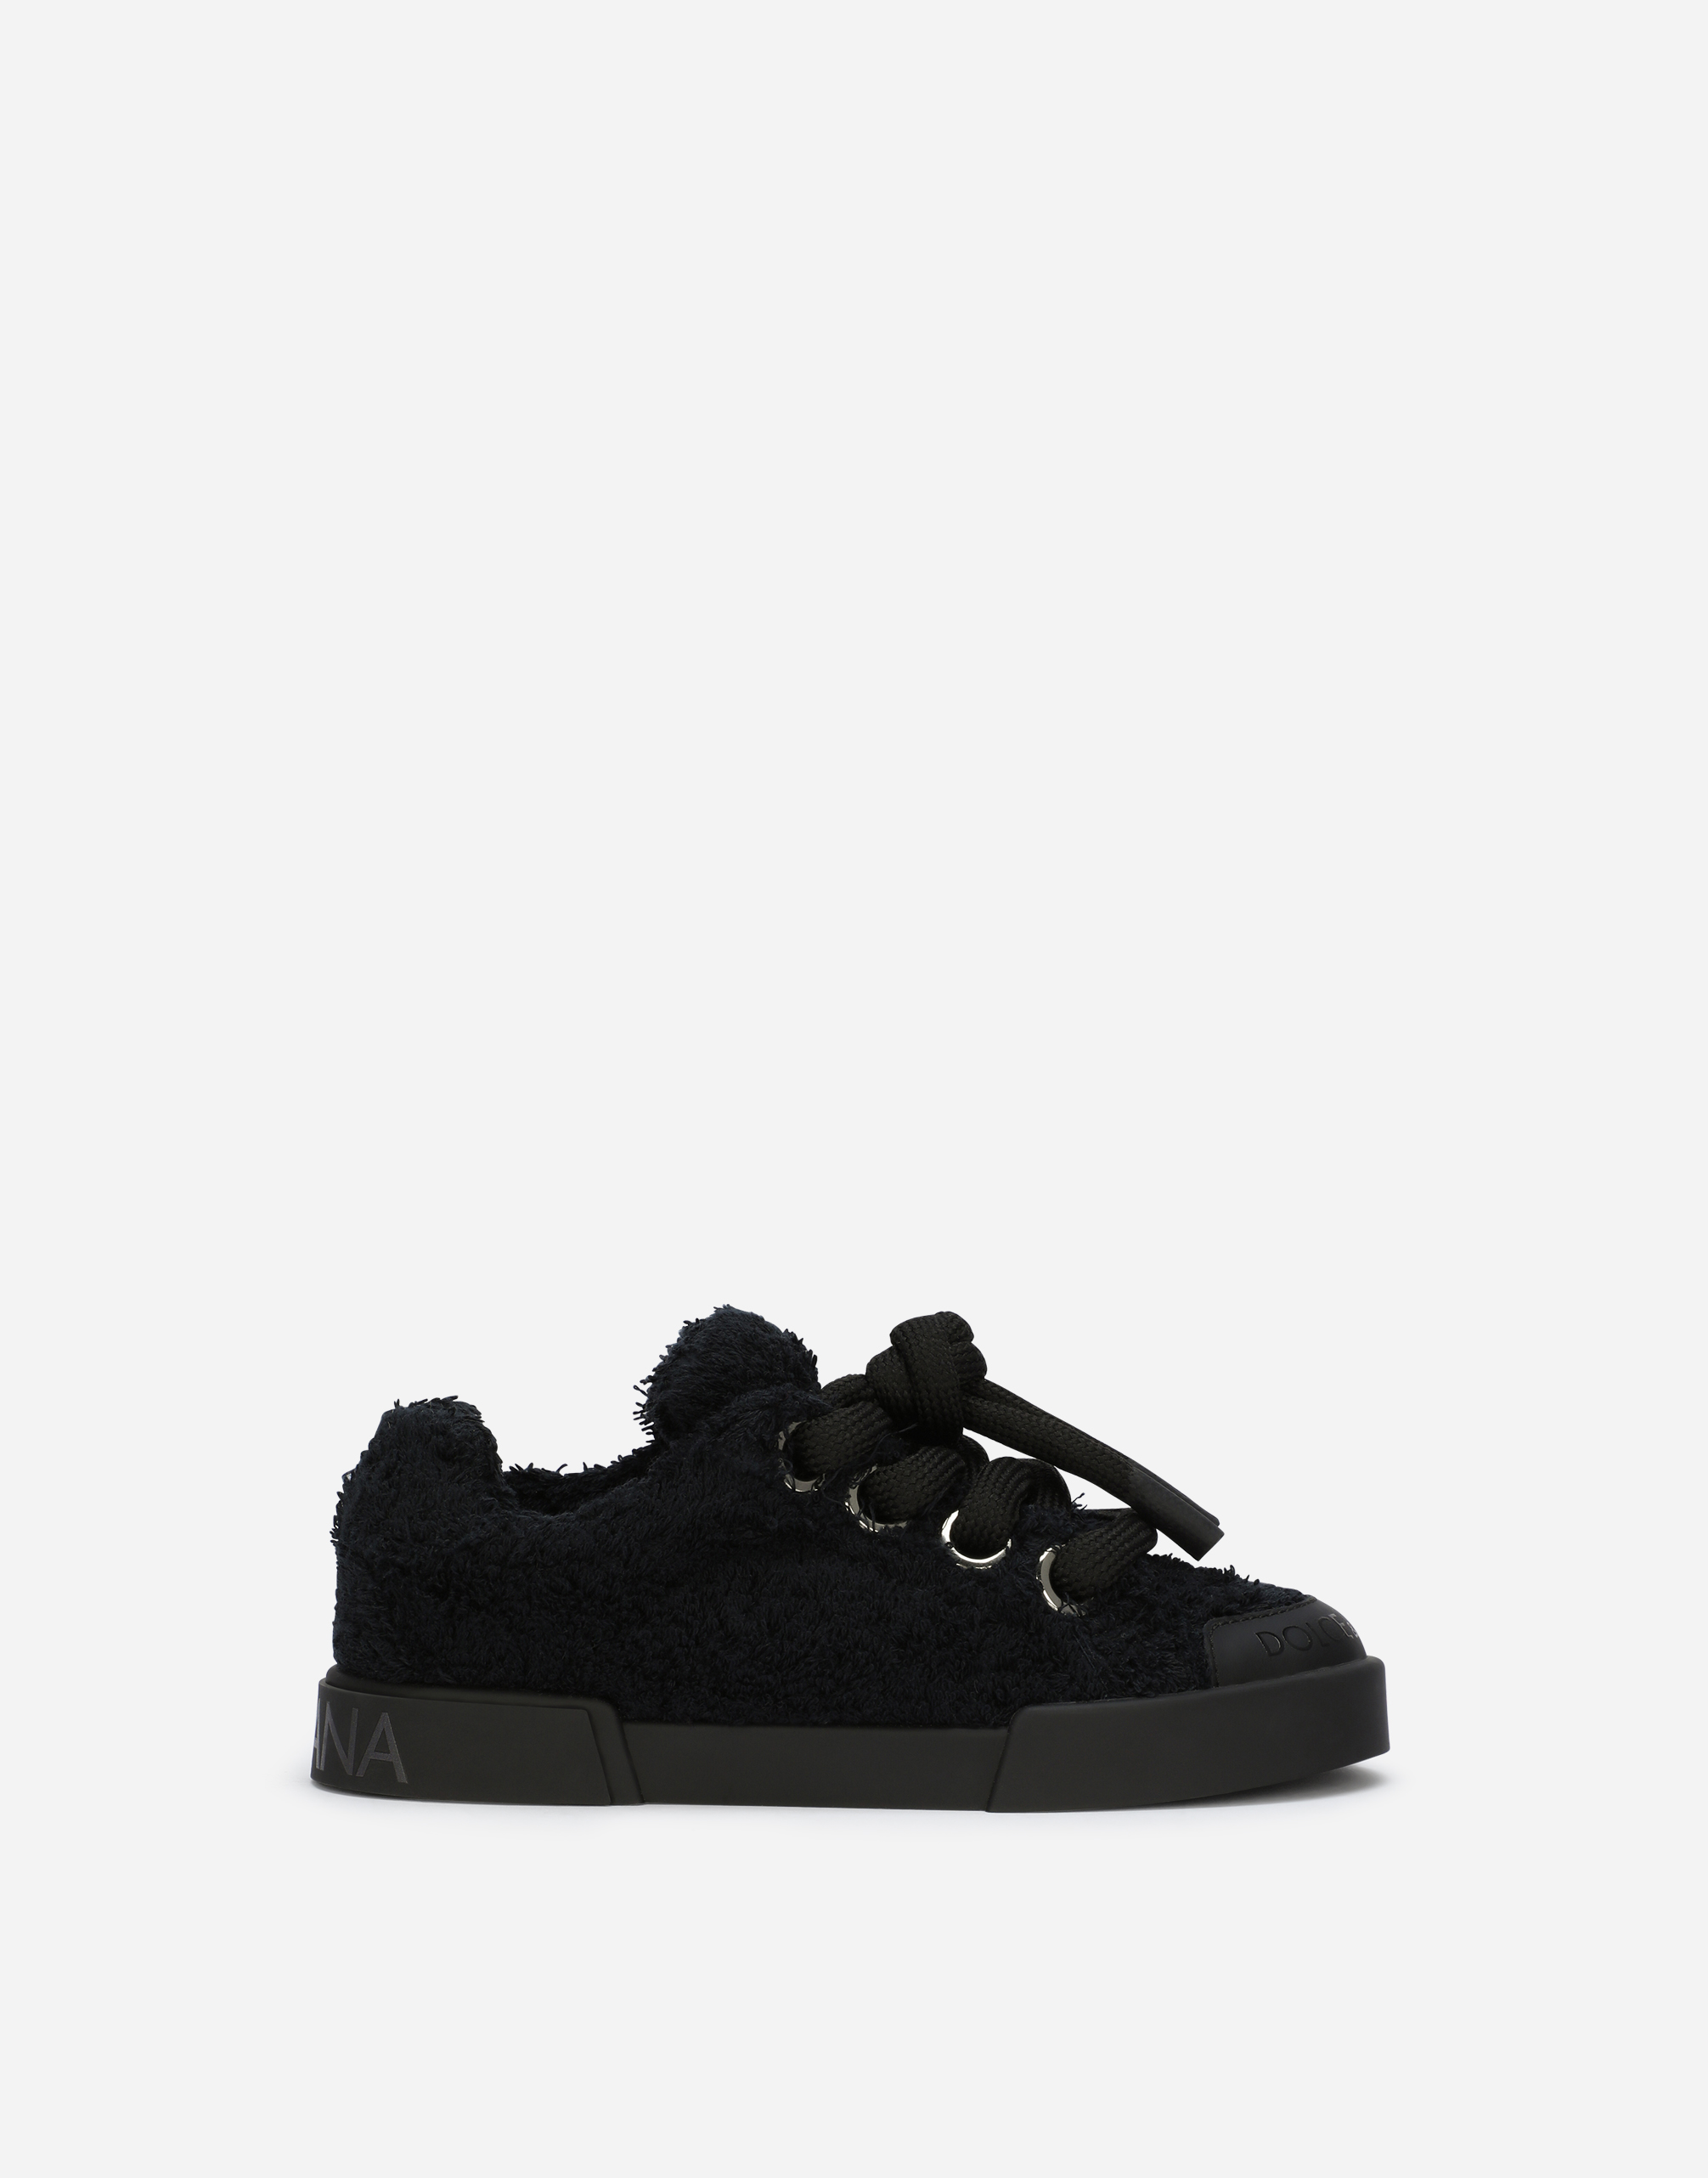 Terrycloth Portofino Light sneakers in Black